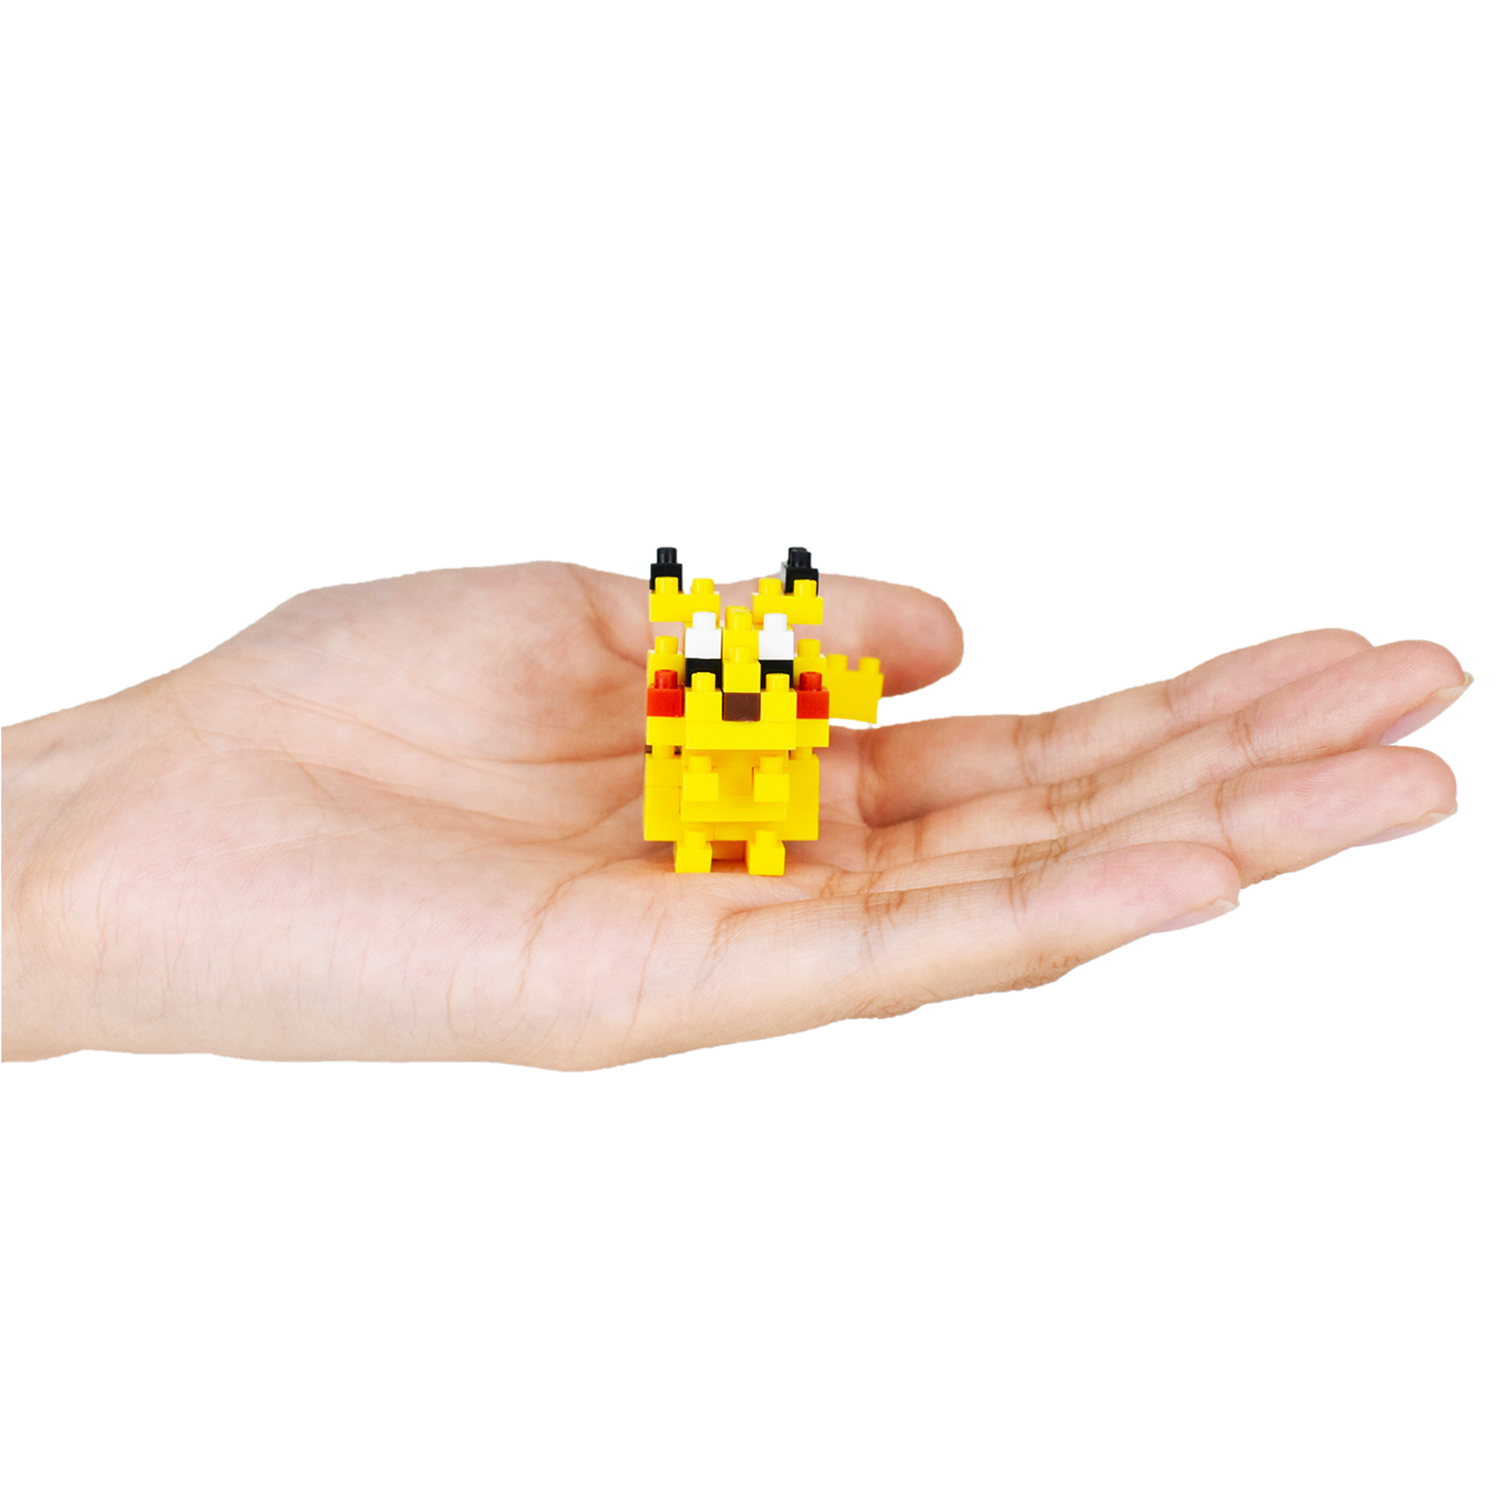 mininano Pokémon nanoblock - Pikachu hand